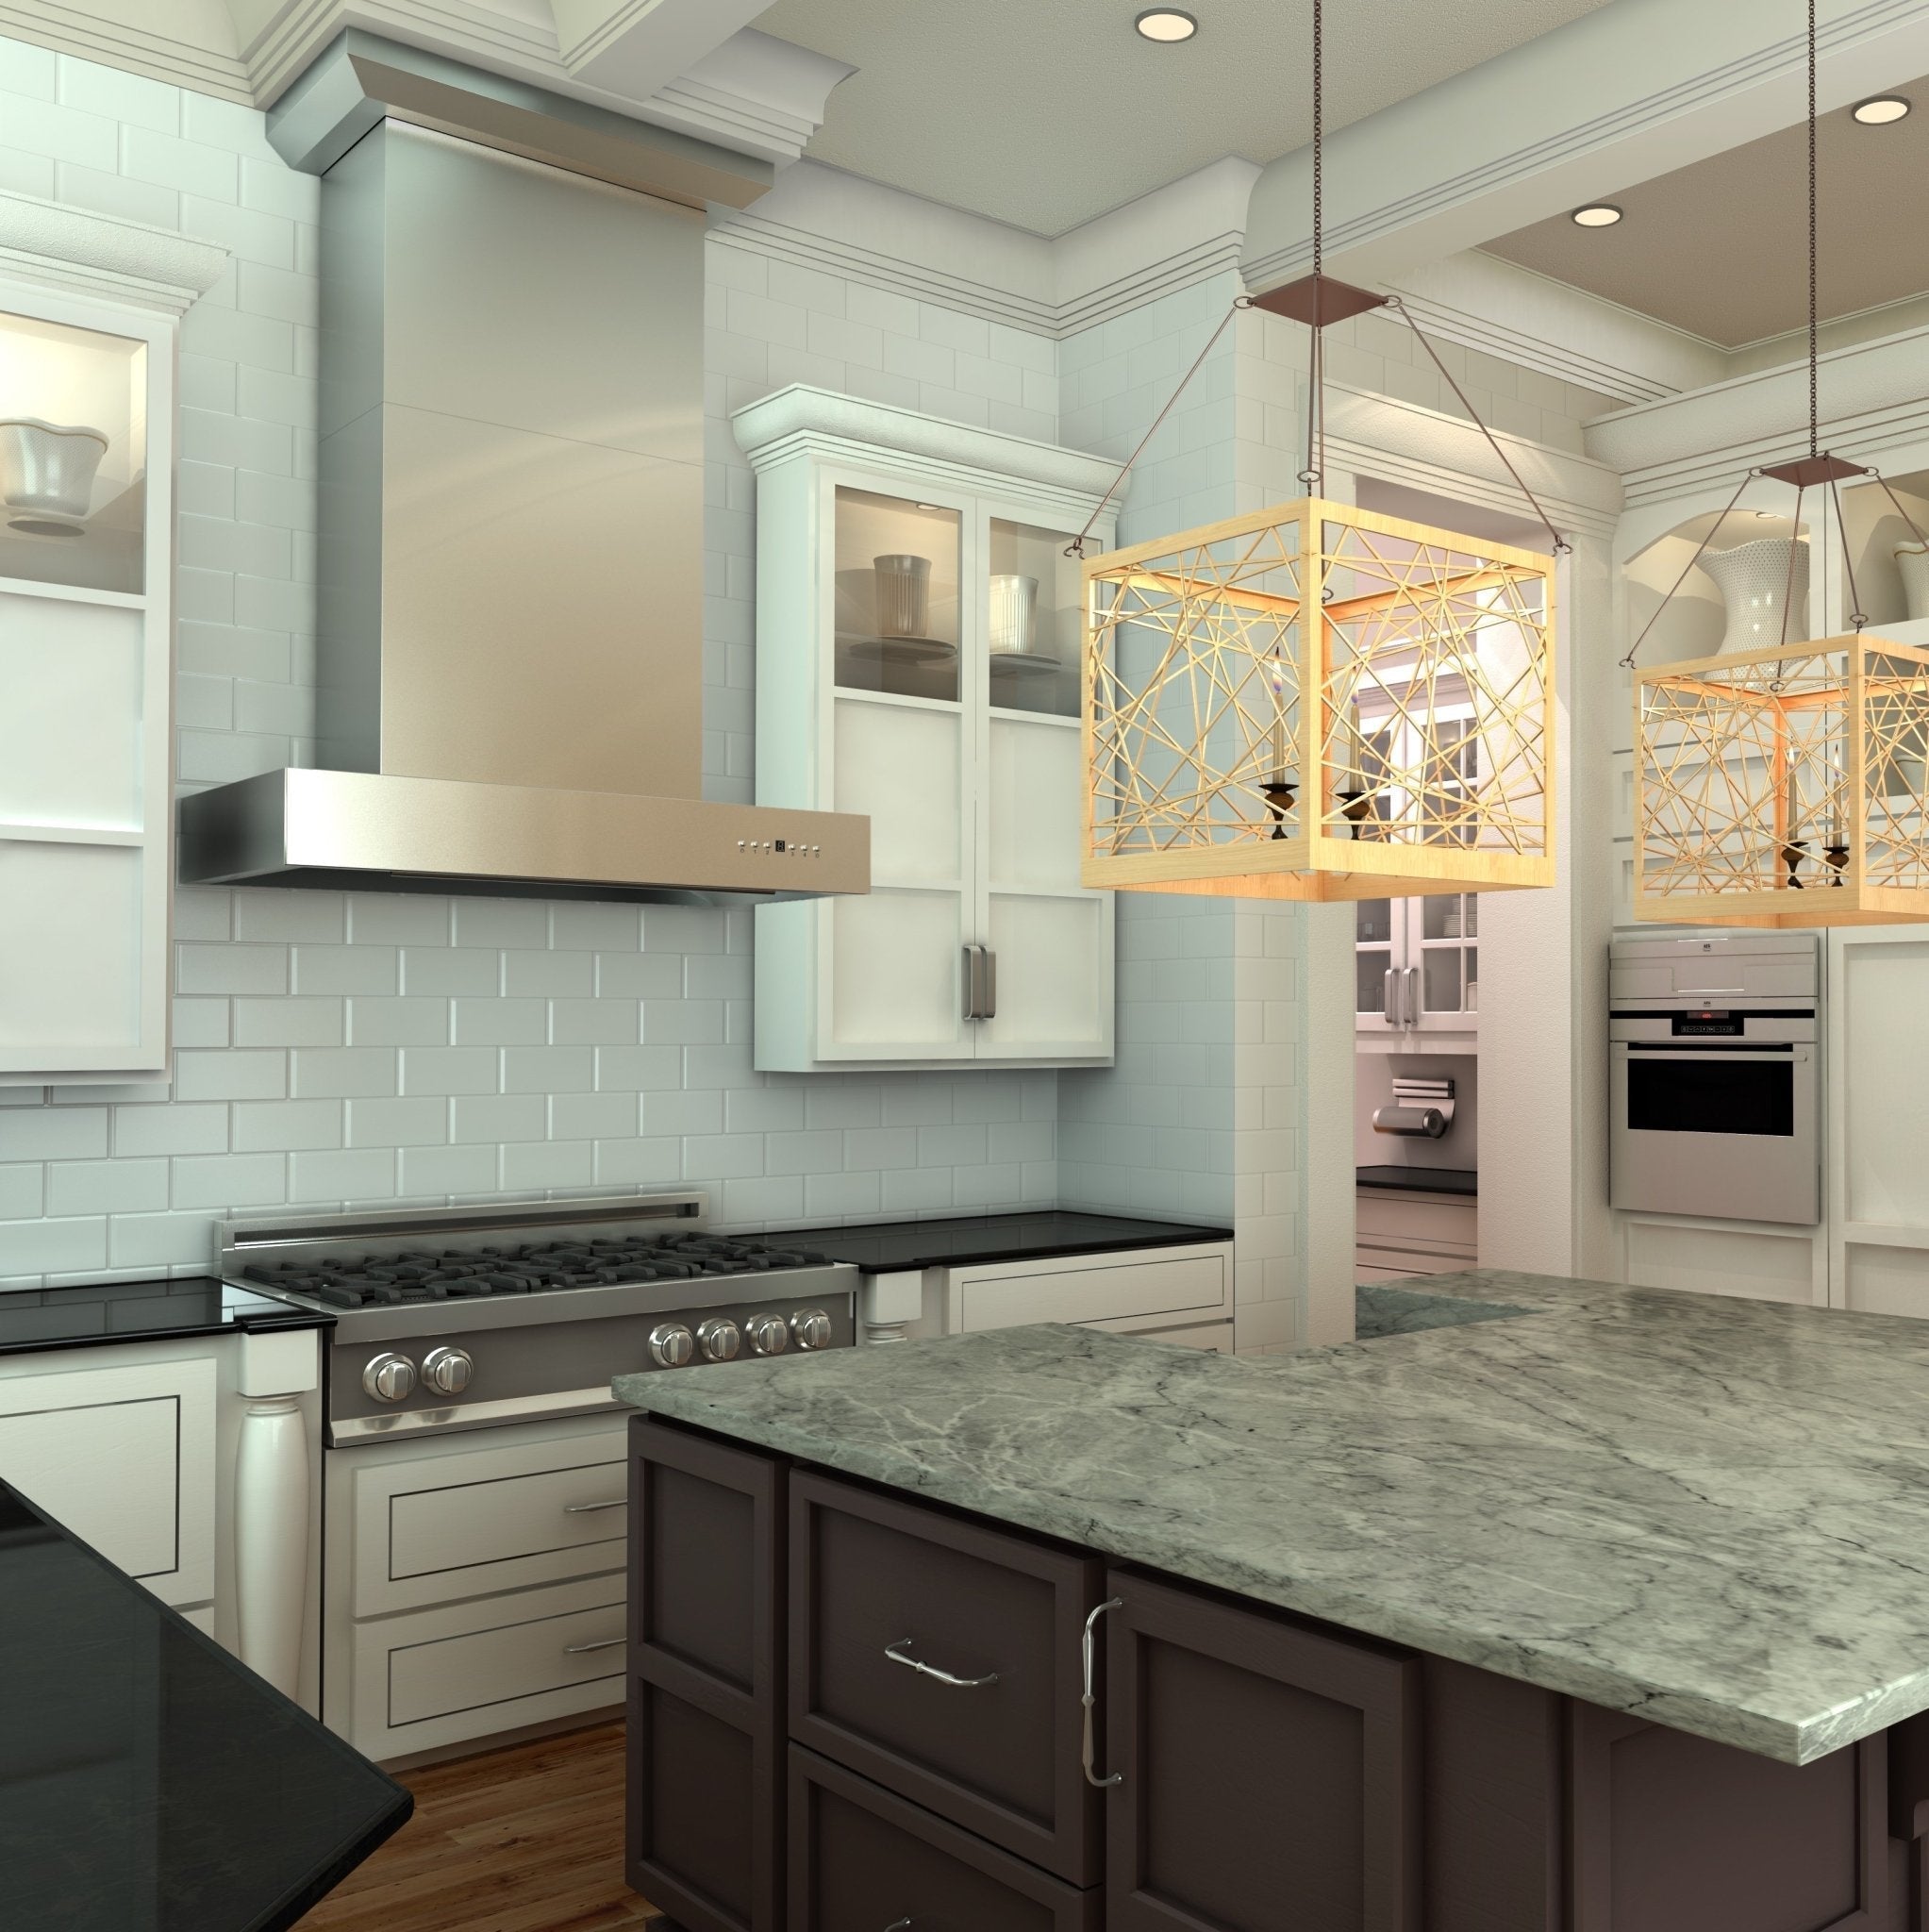 ZLINE Convertible Professional Wall Mount Range Hood in Stainless Steel (KECOM) rendering in a luxury kitchen.